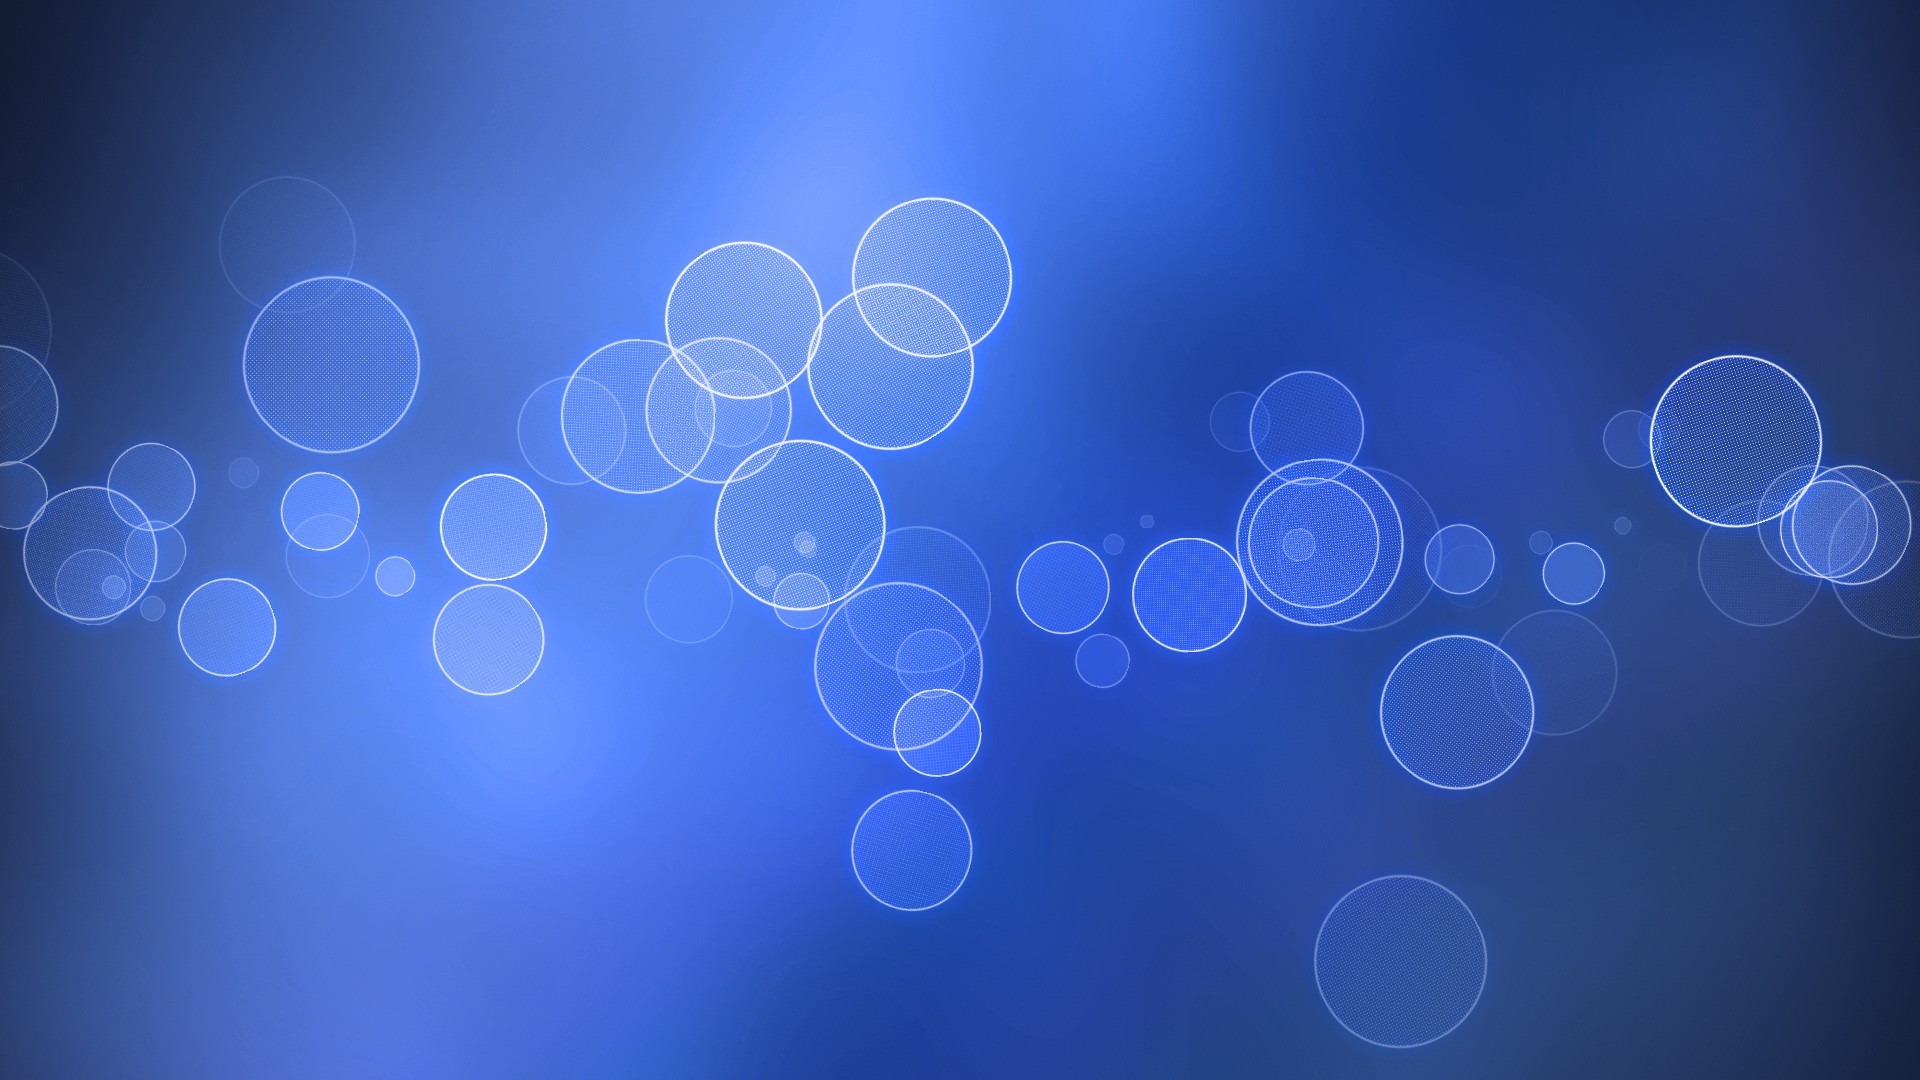 General 1920x1080 bubbles minimalism blue background digital art gradient simple background